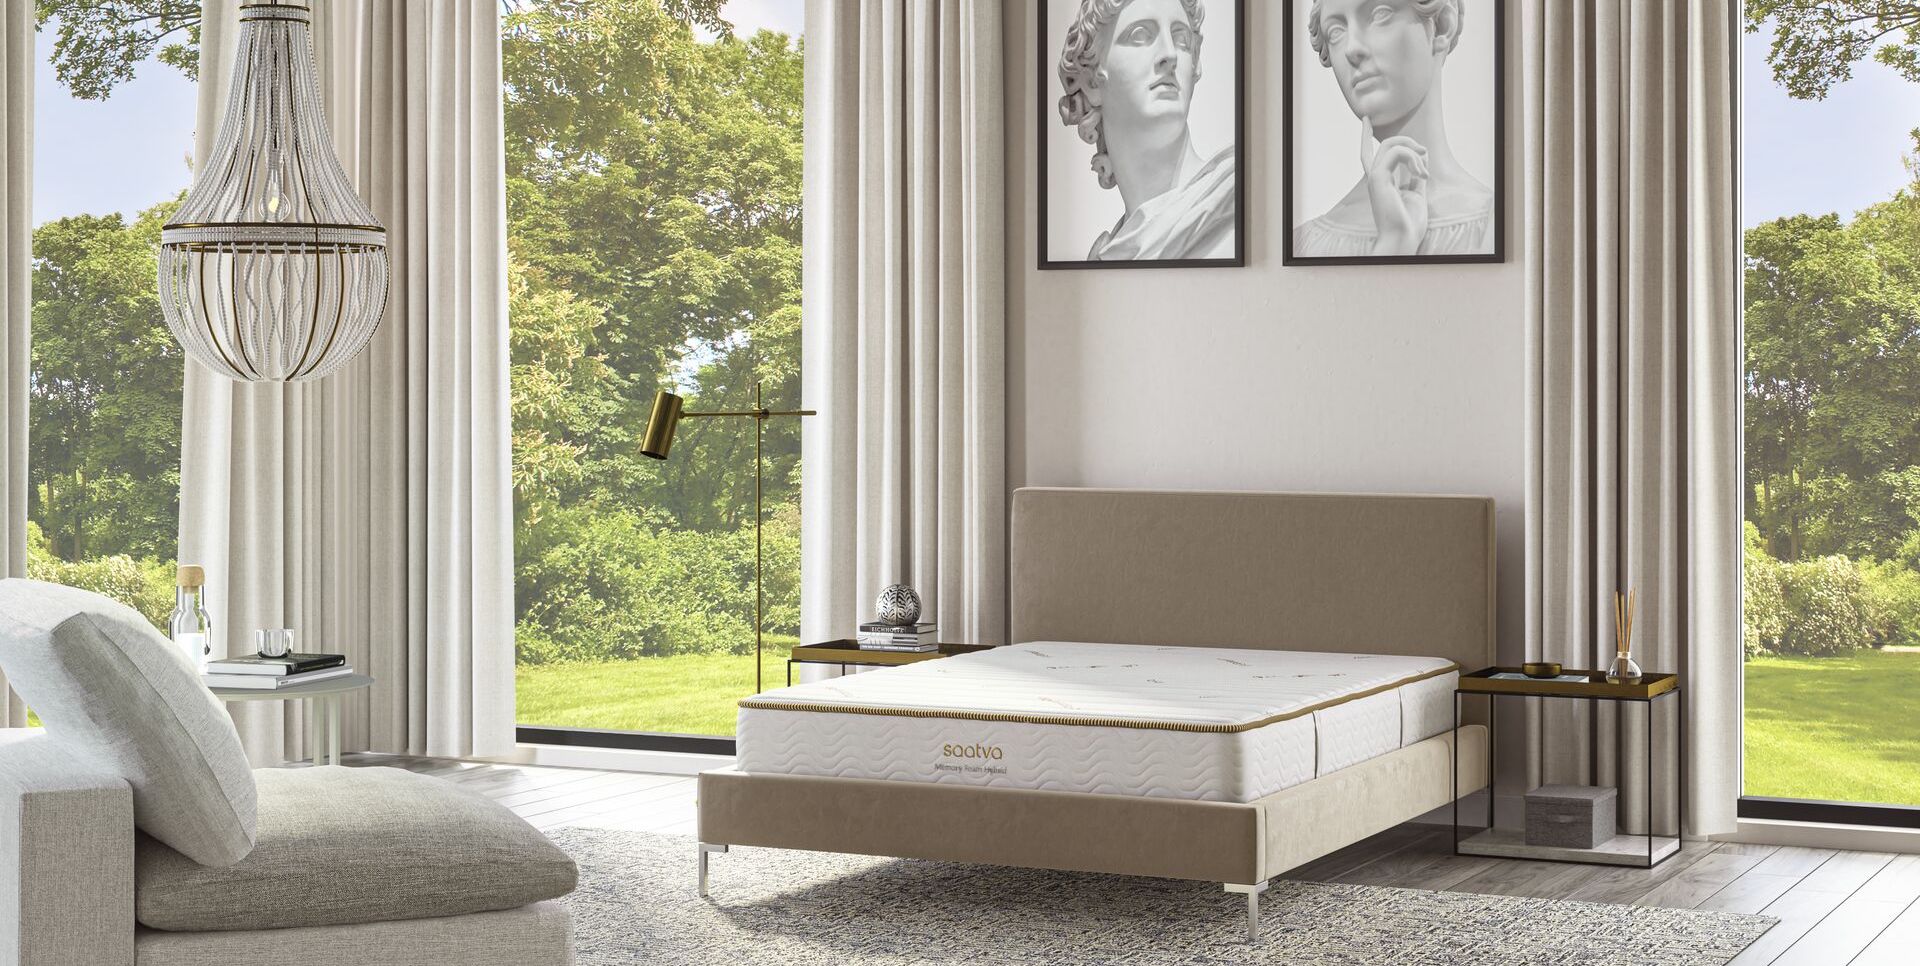 saatva mattress vs azure hybrid memory foam mattress